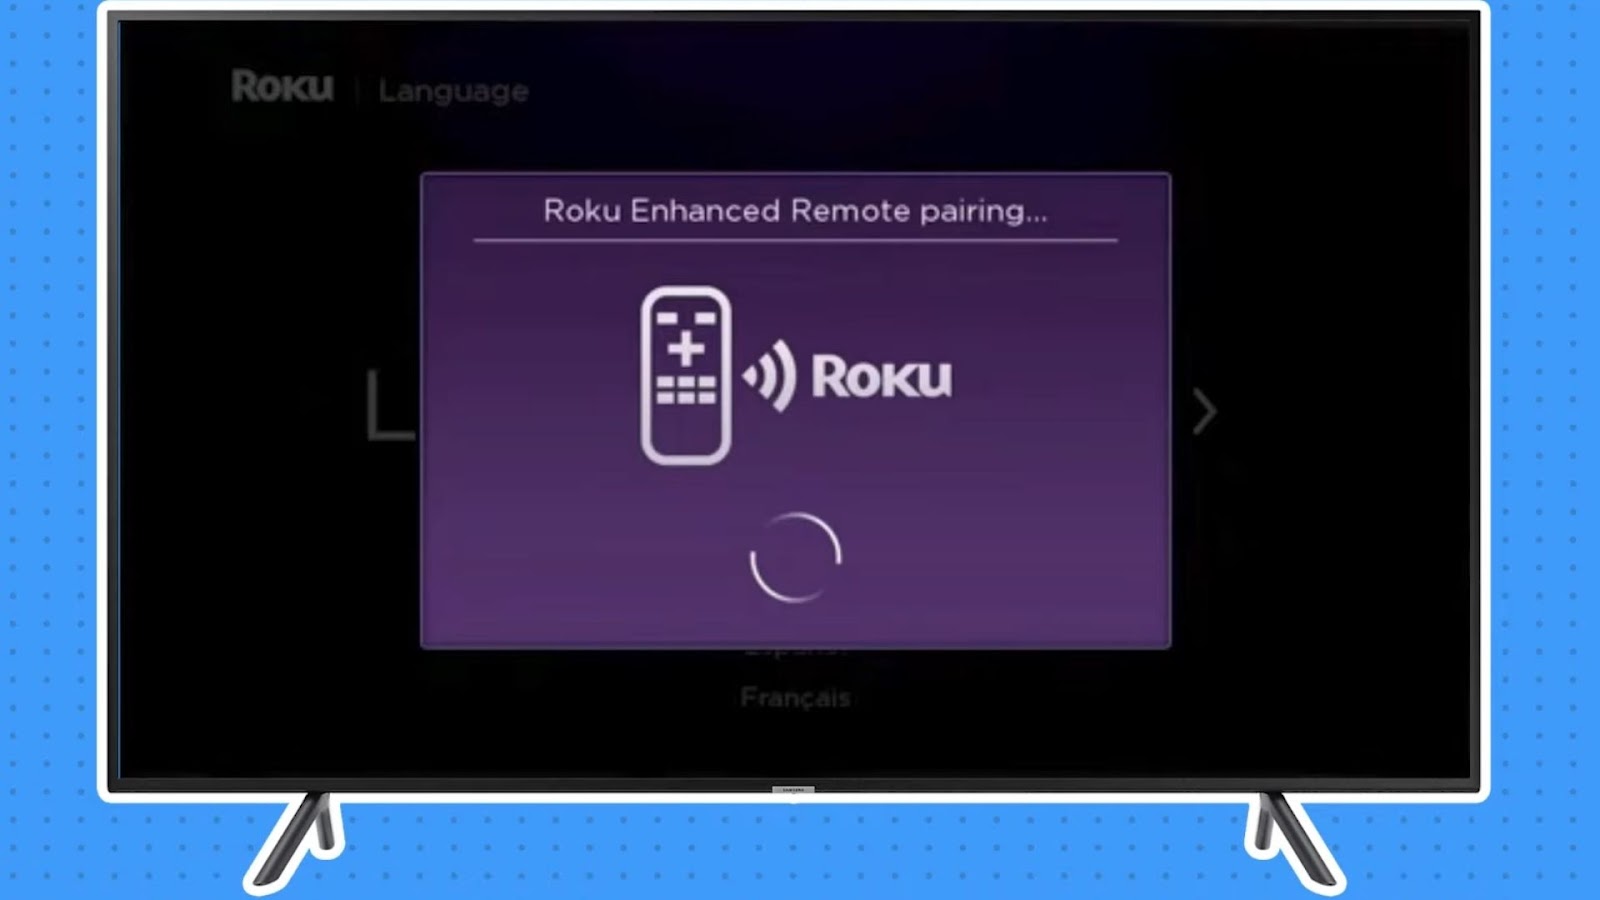 Reset the Hisense Roku Remote